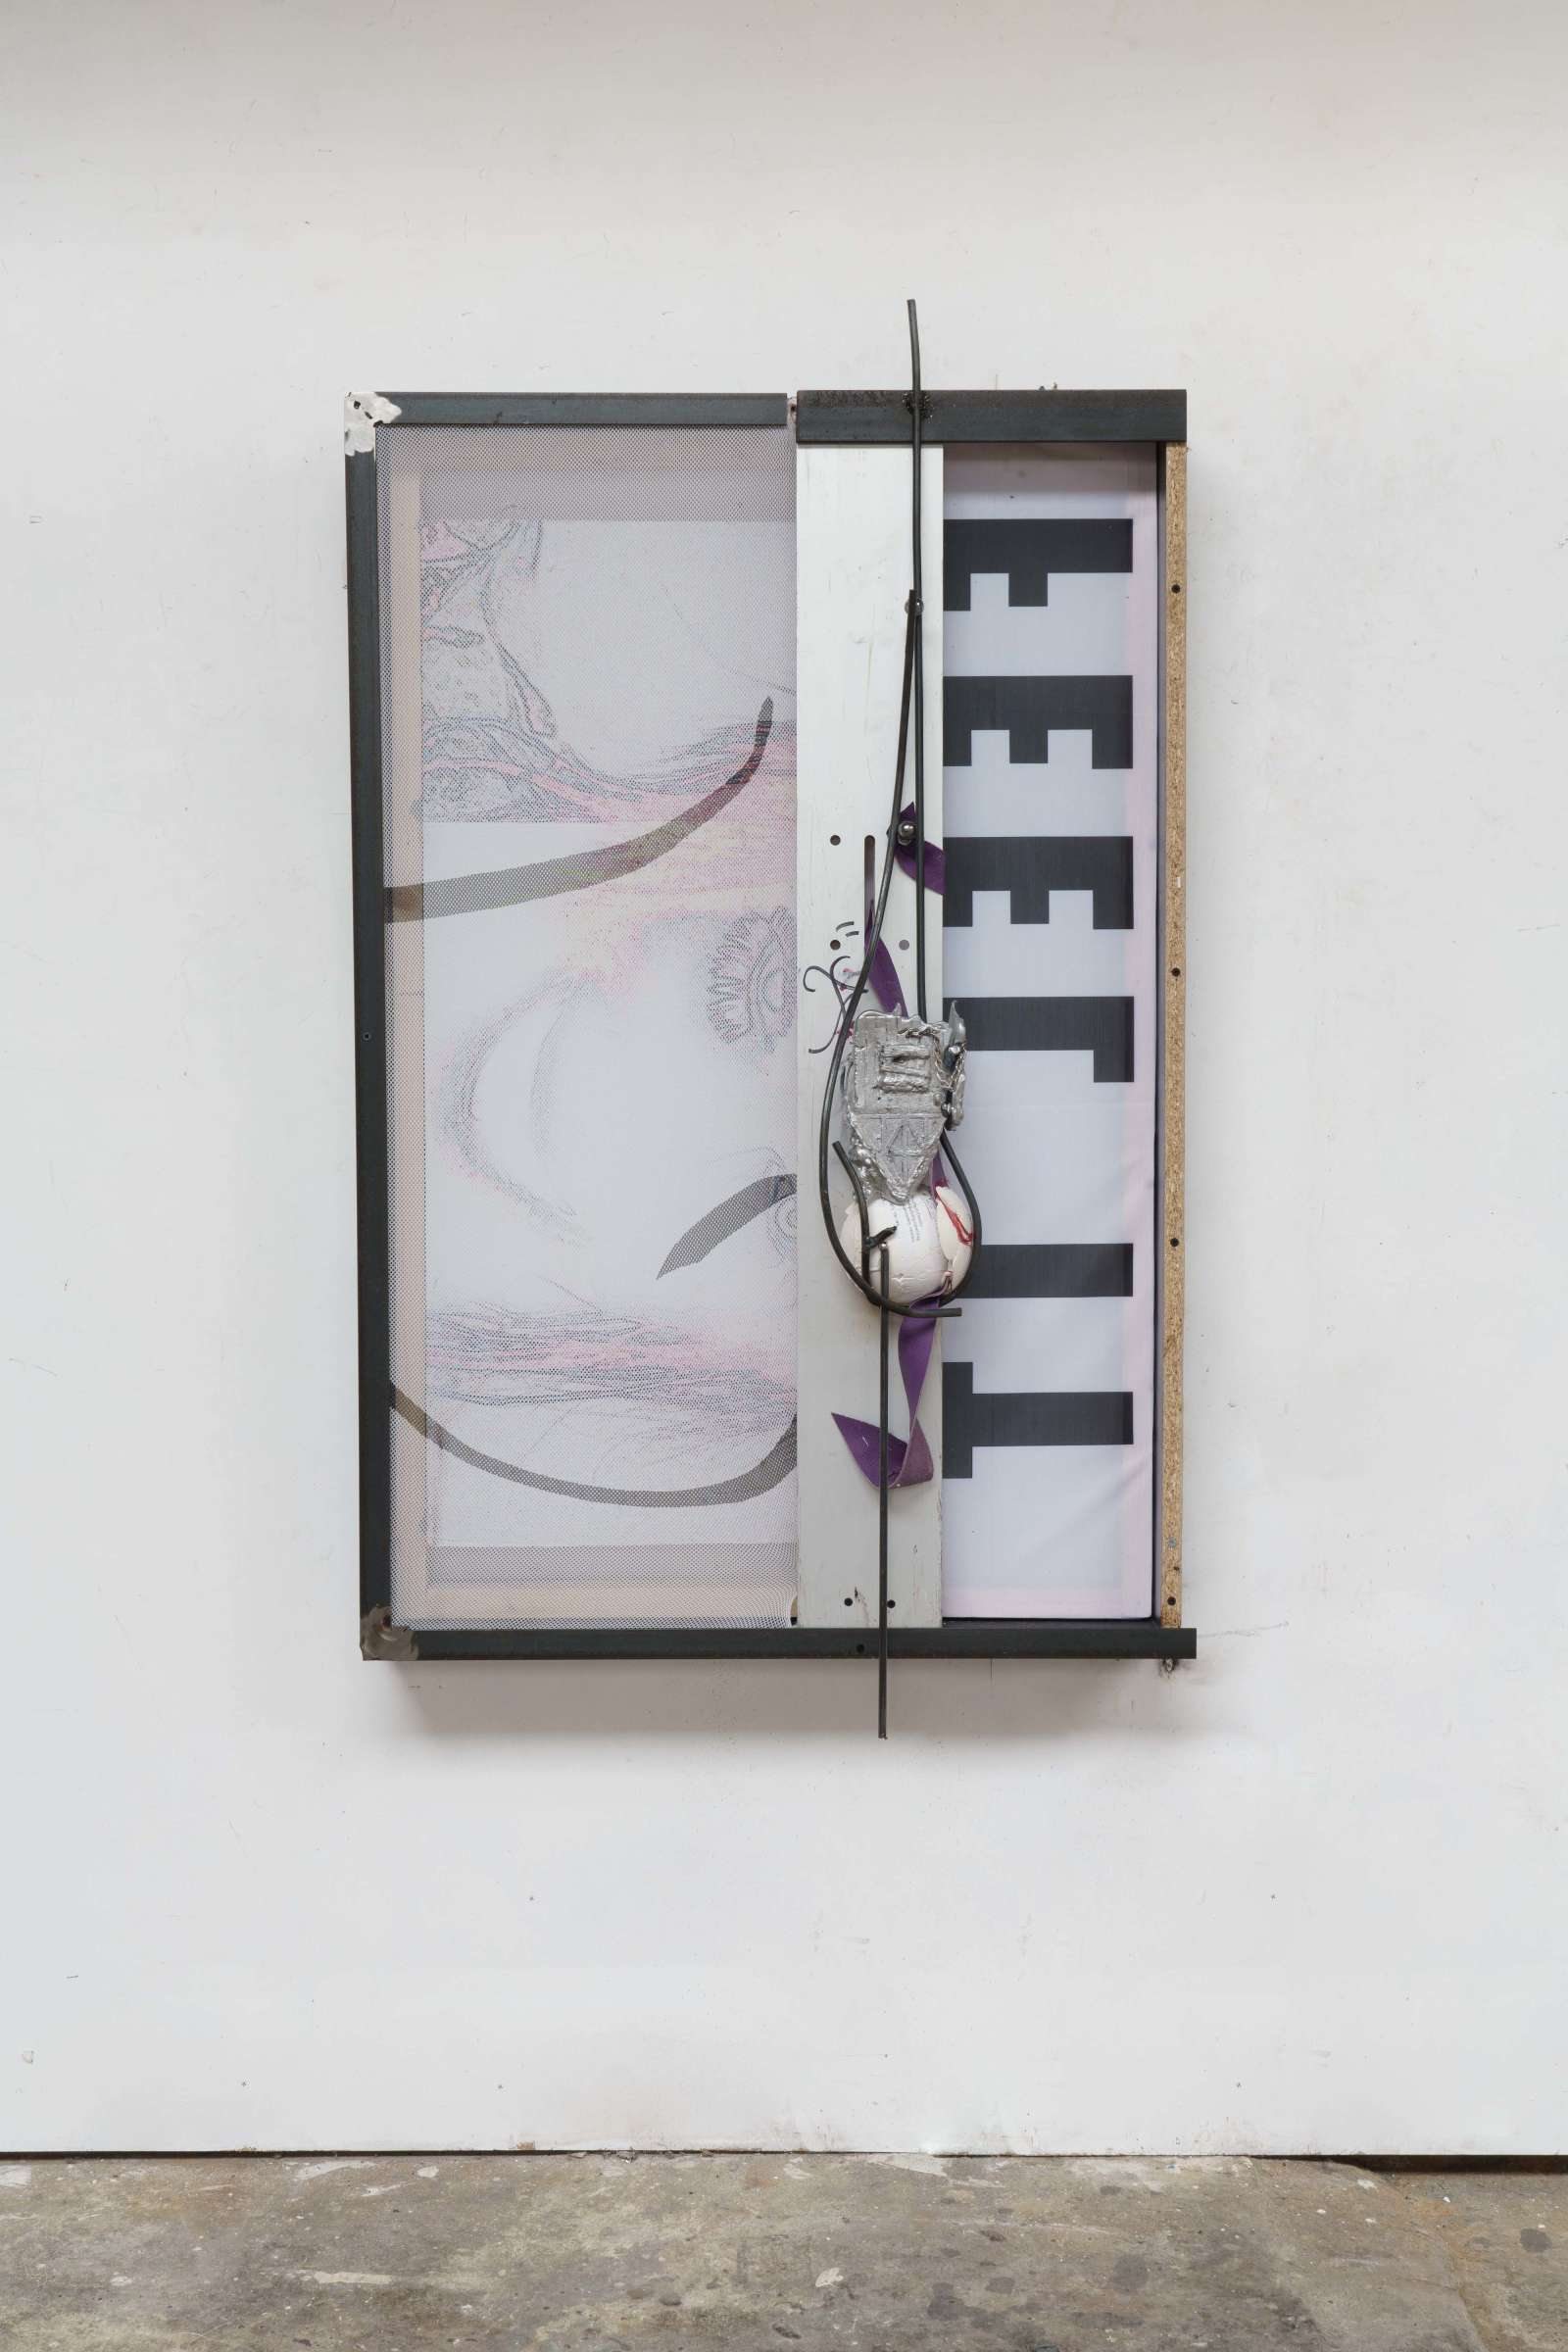 David Douard, “Feel It“ (2020). 16,000 €. Courtesy of Chantal Crousel Gallery
